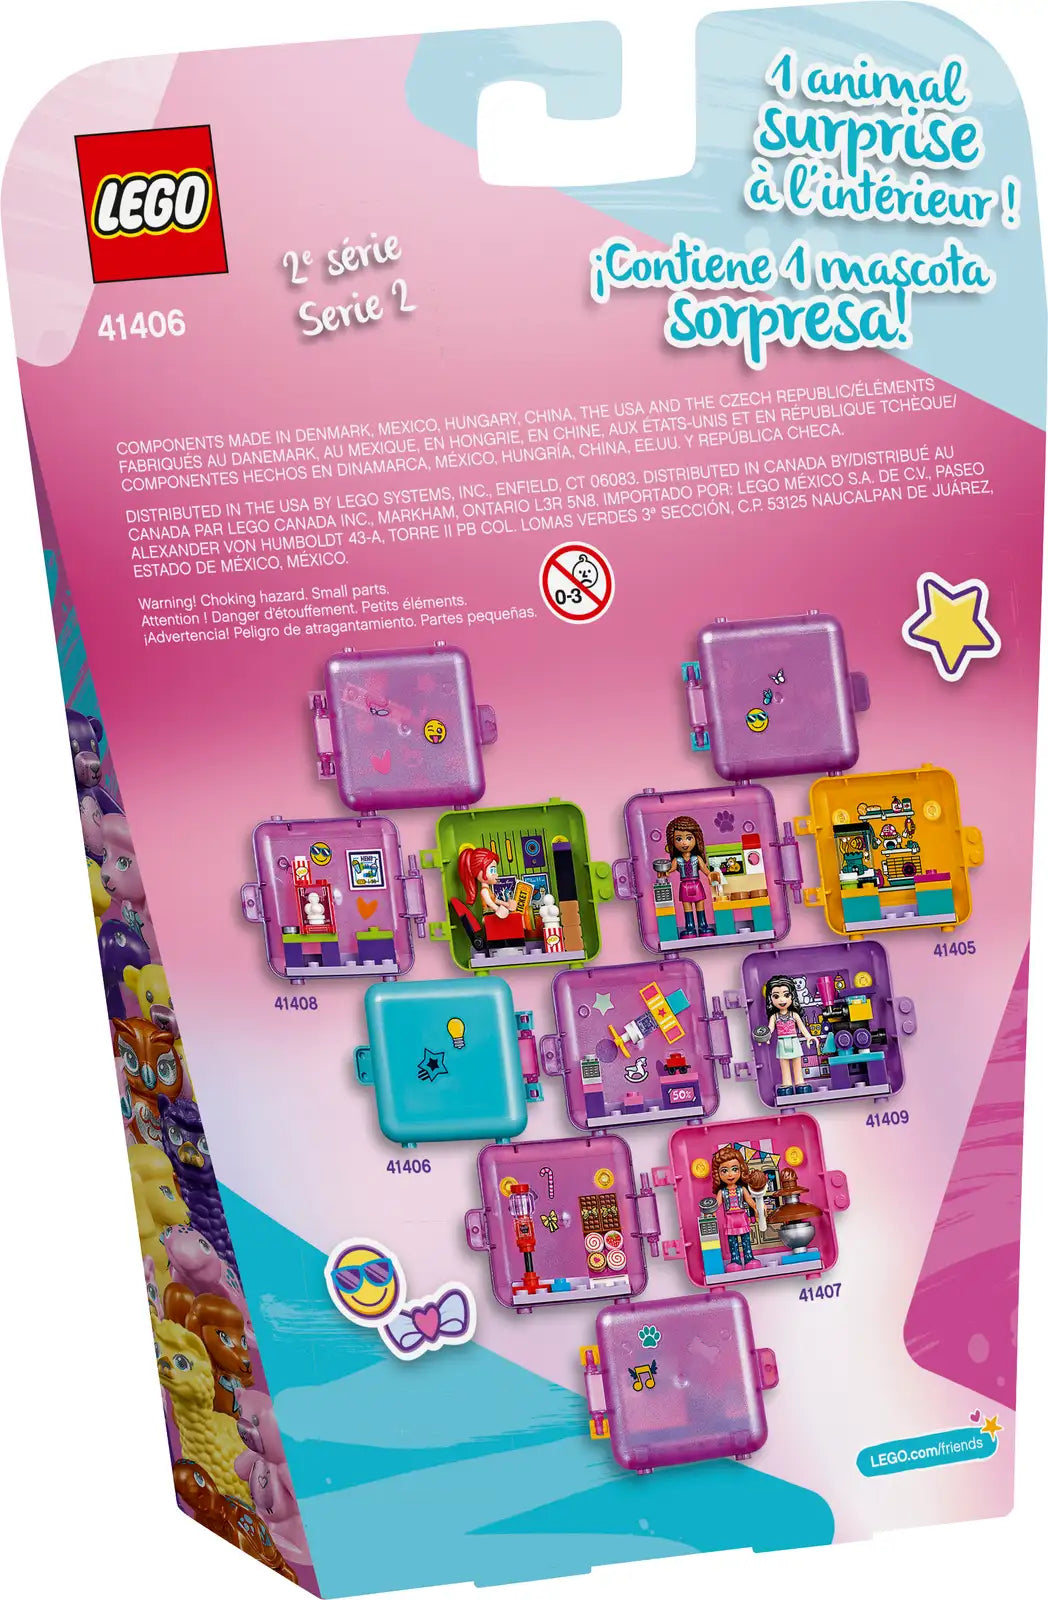 LEGO® Friends Stephanie’s Shopping Play Cube | 41406